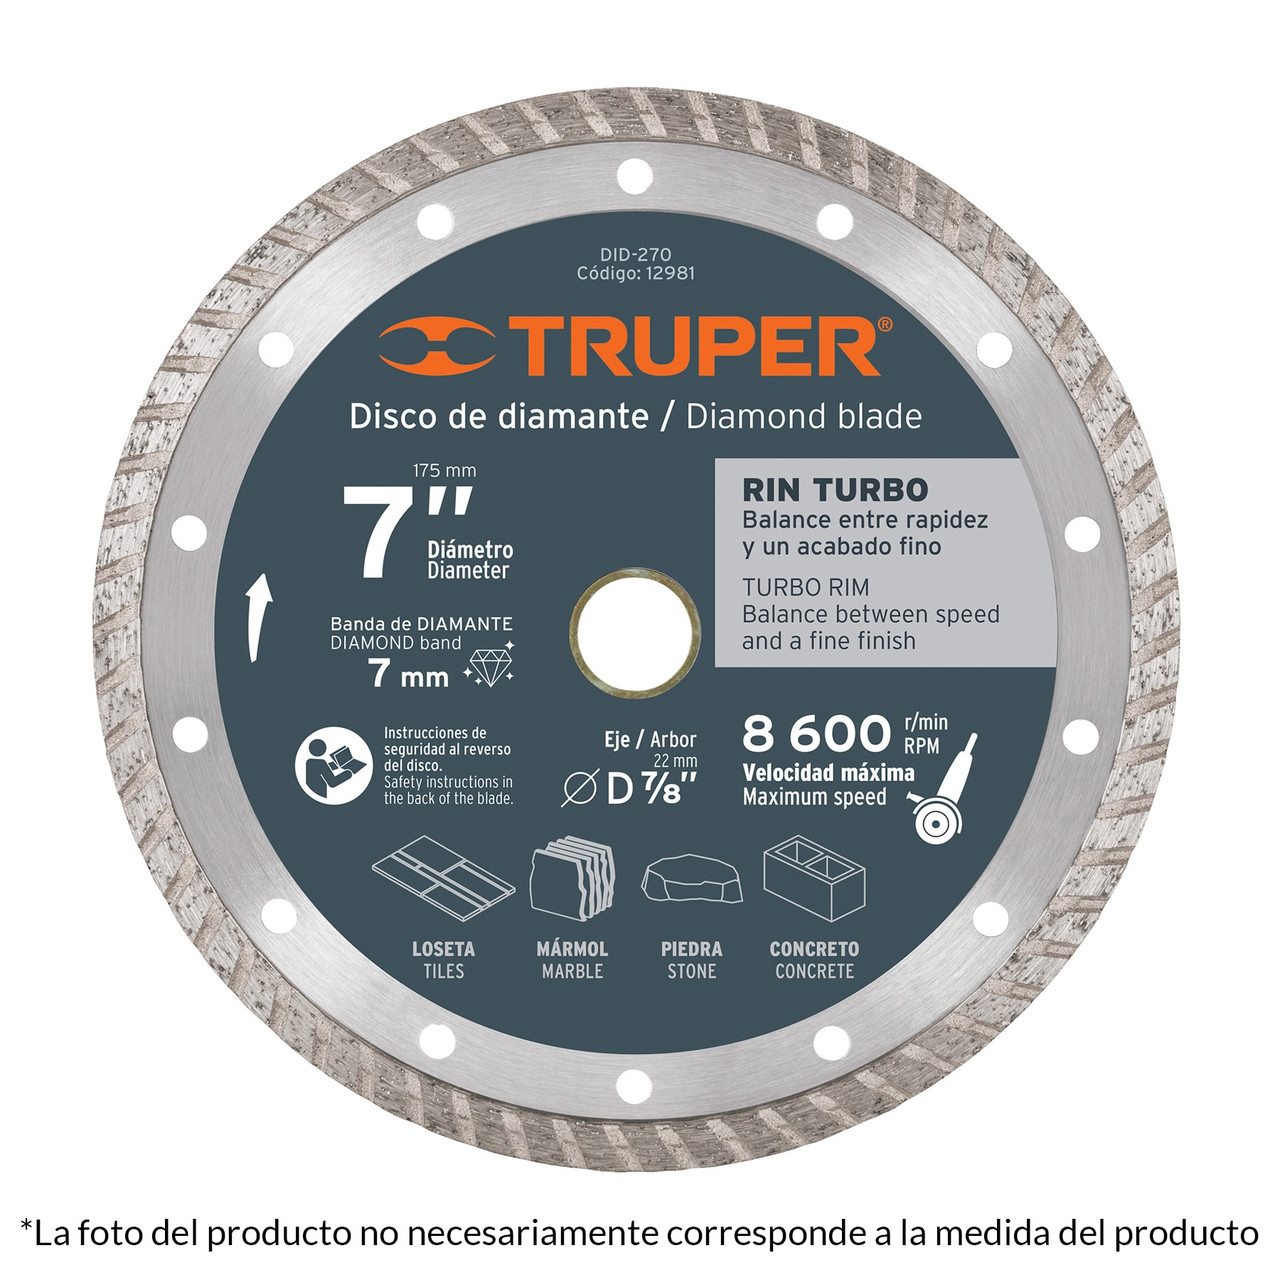 Truper 4" Turbo Rim Diamond Blade #12979-2 Pack